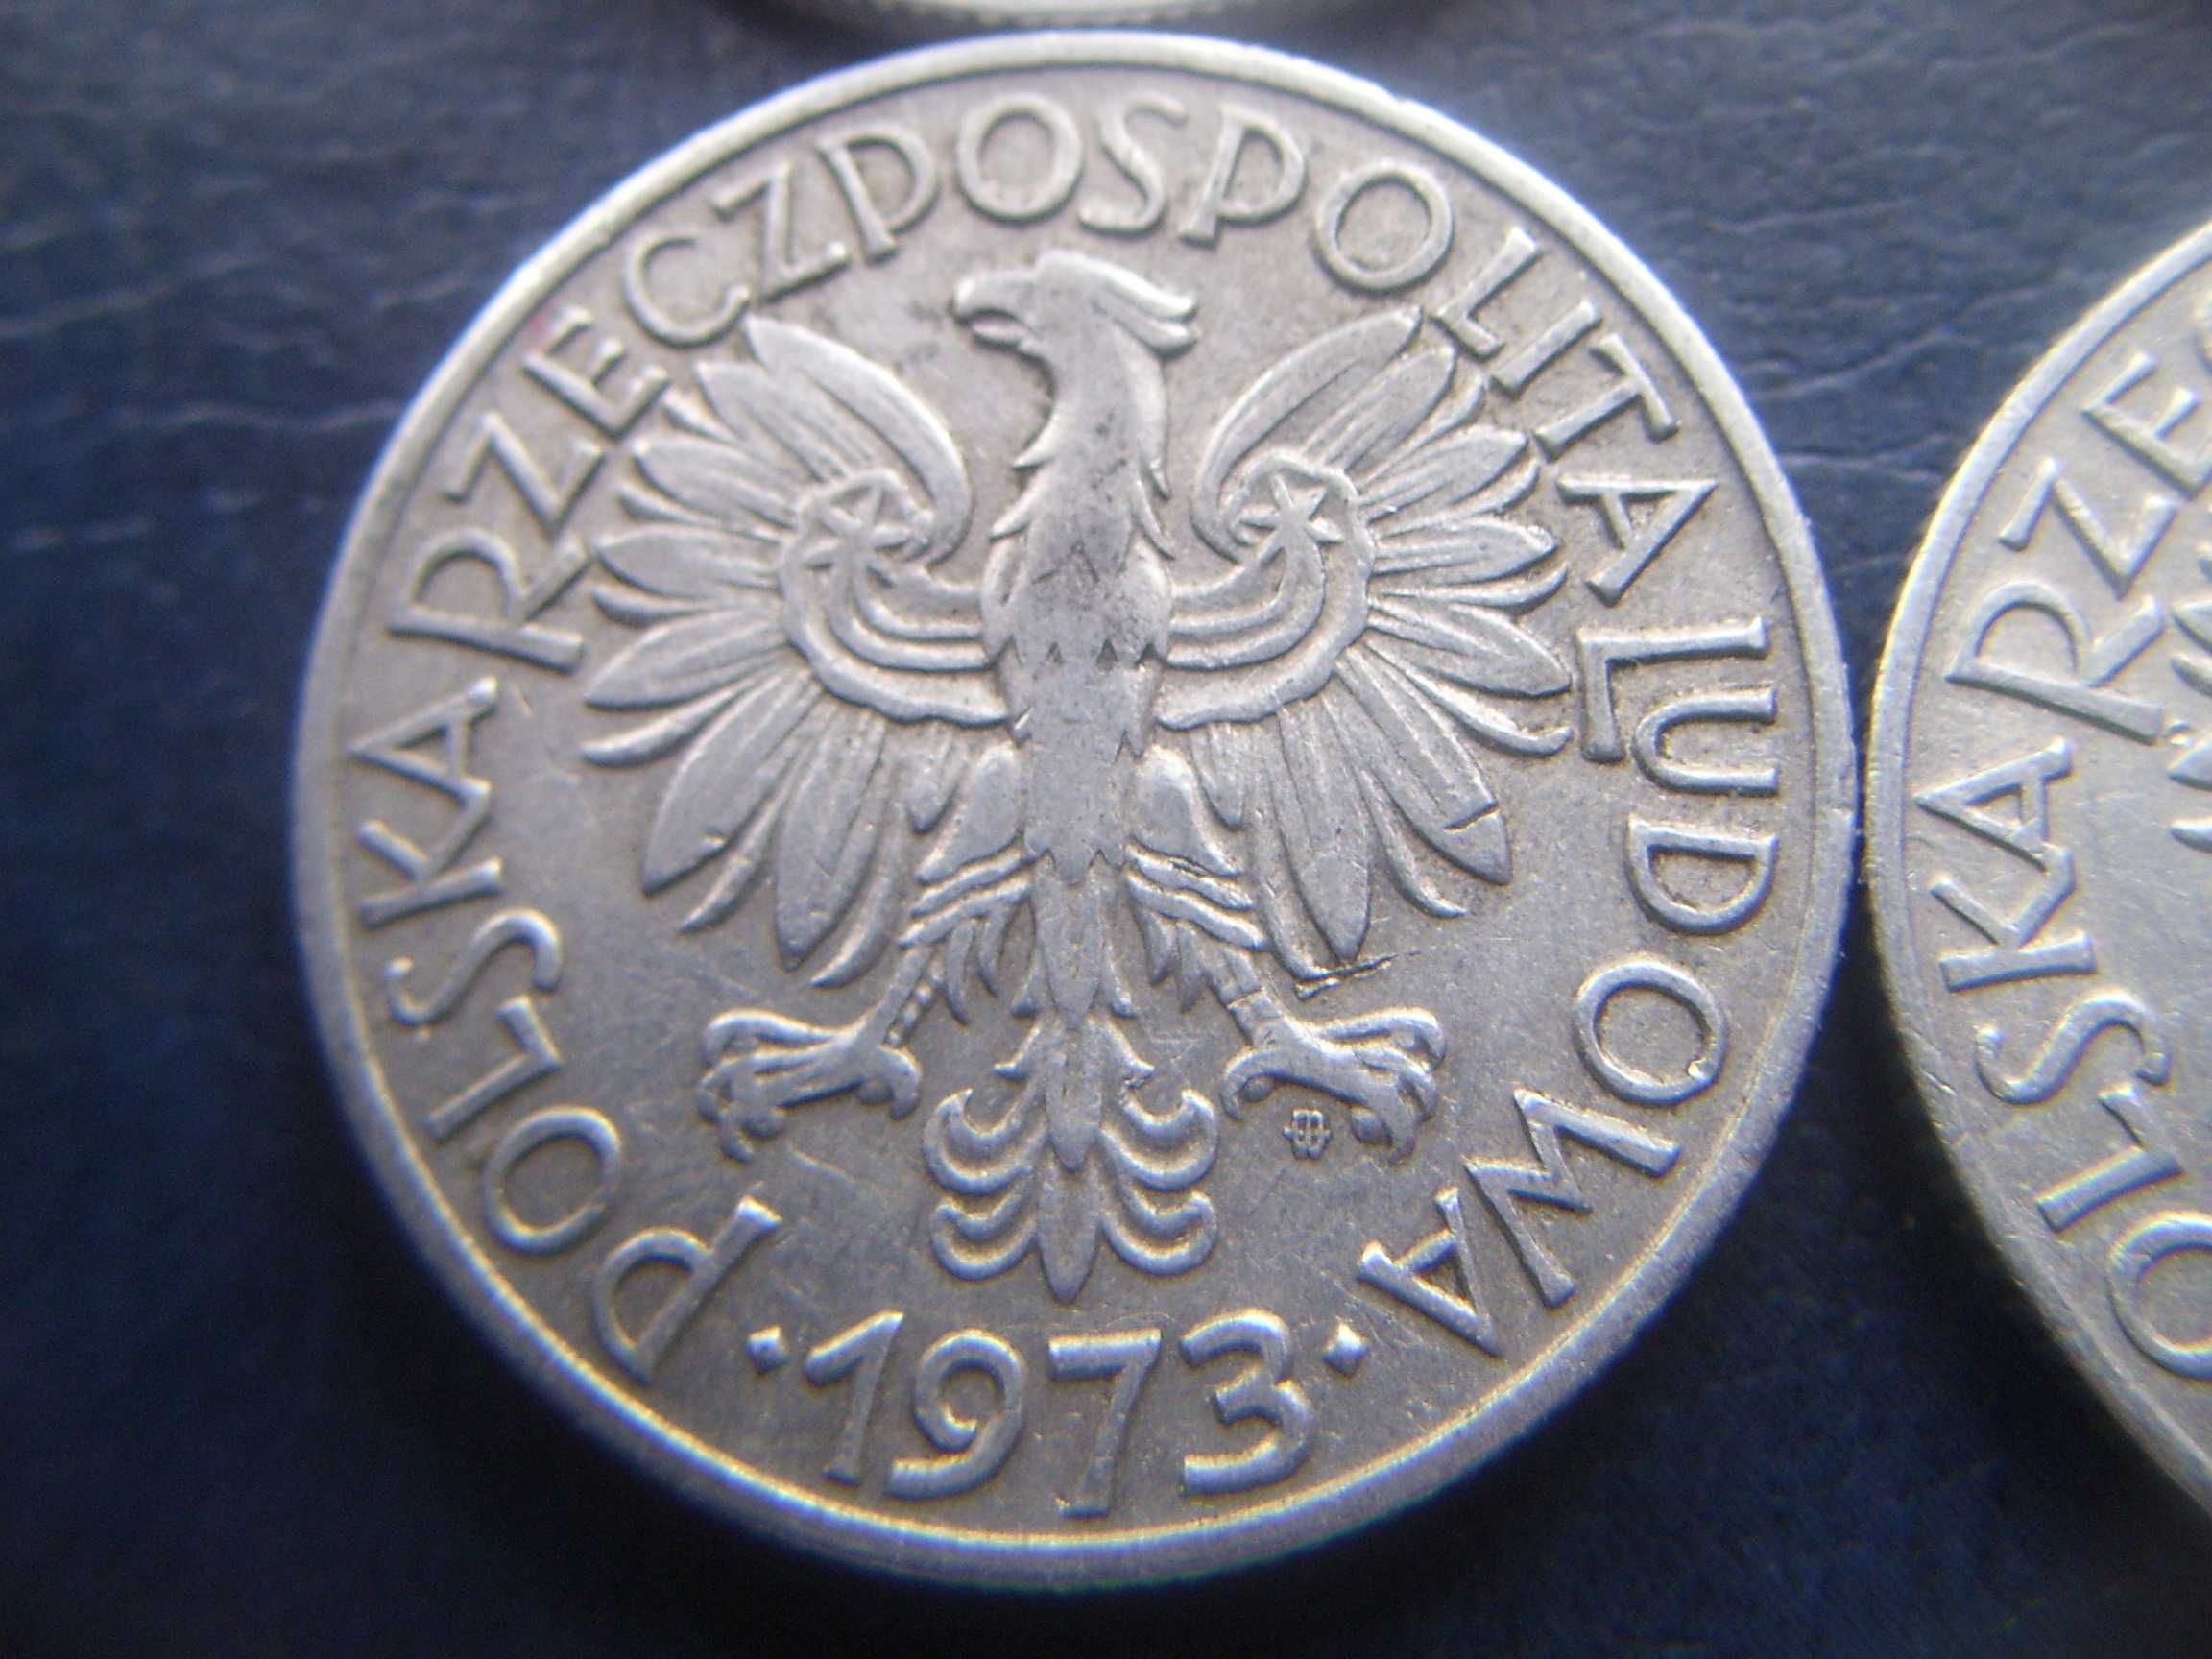 Stare monety 5 złotych Rybak 1959 , 1960 , 1973 ,, 1974 PRL zestaw